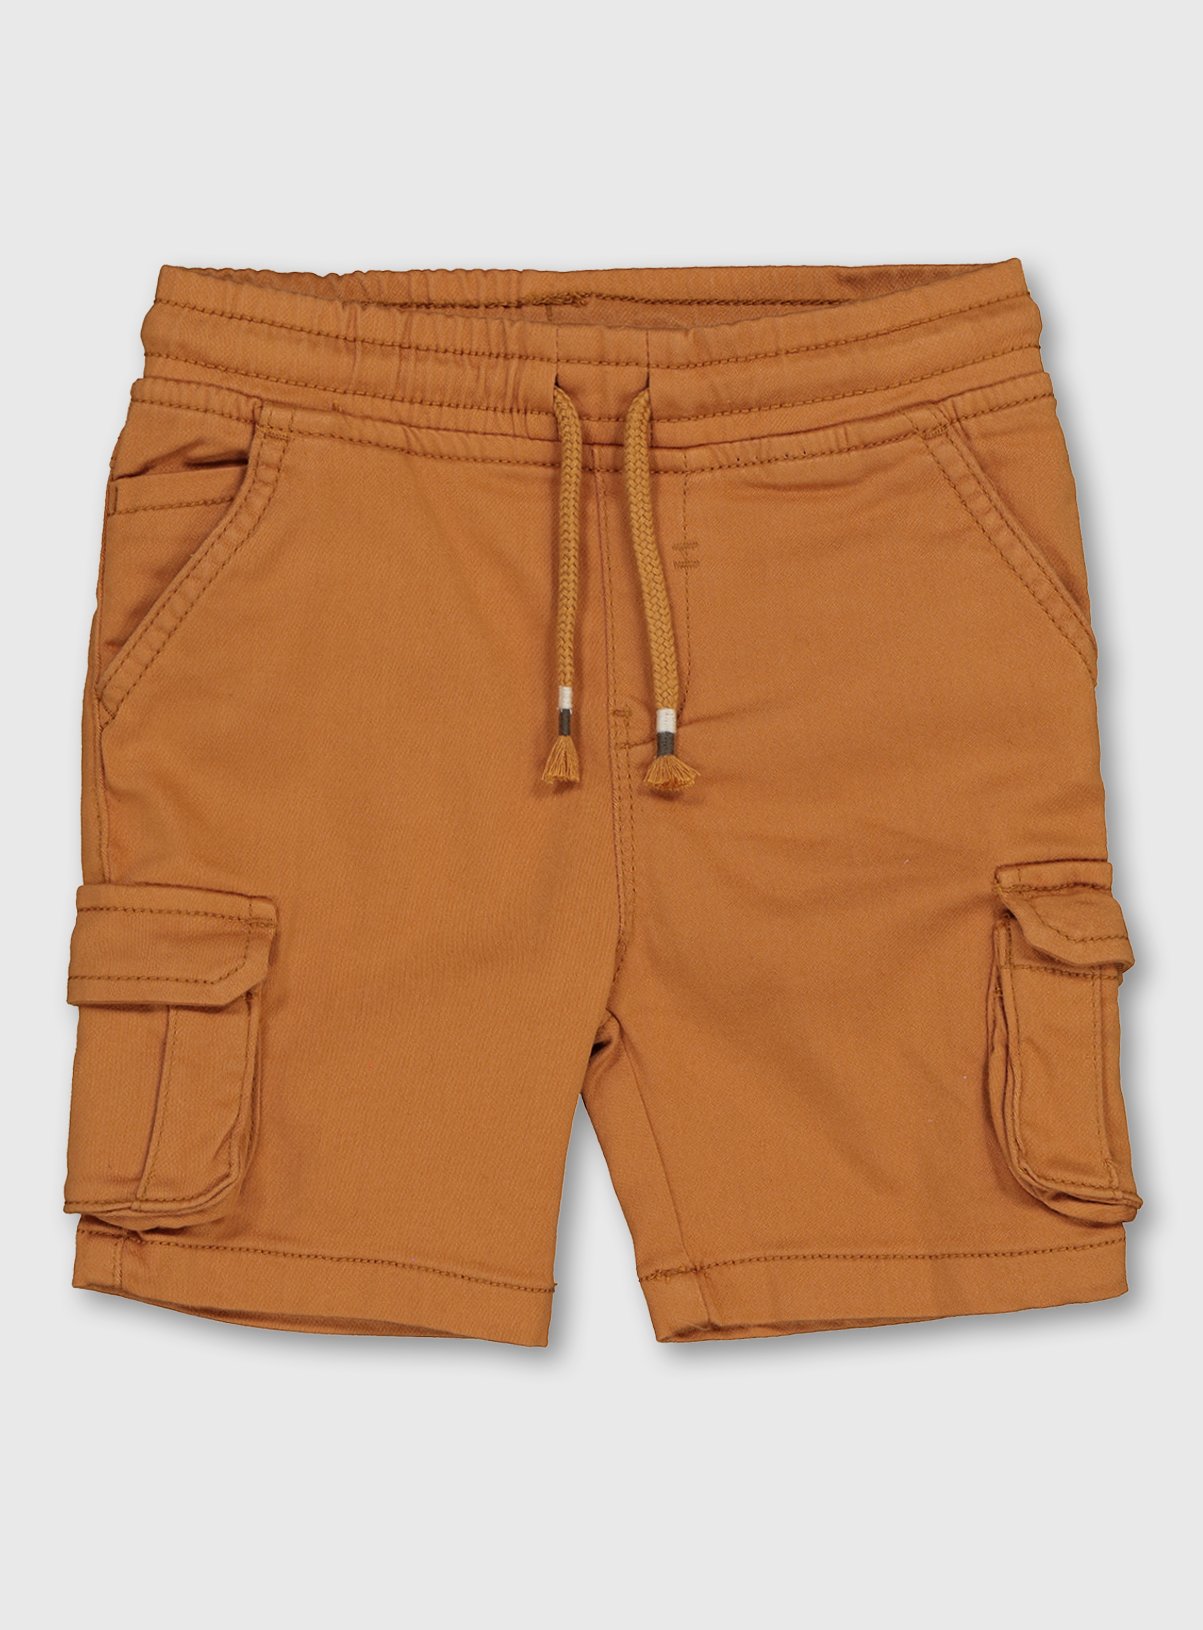 Tan Cargo Shorts Review